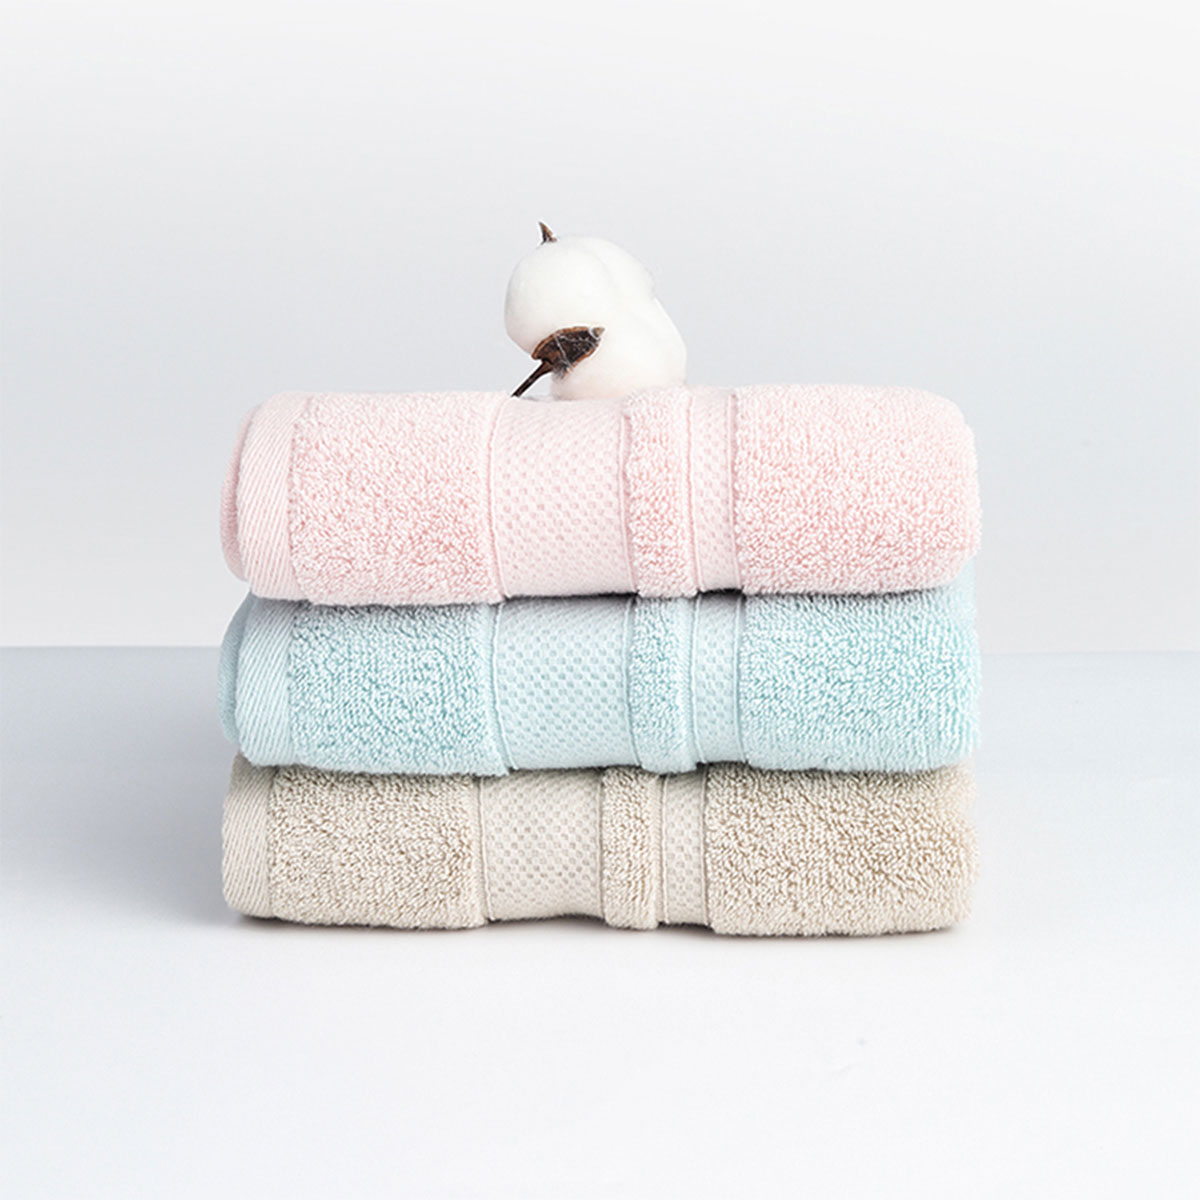 Antibacterial cotton towel